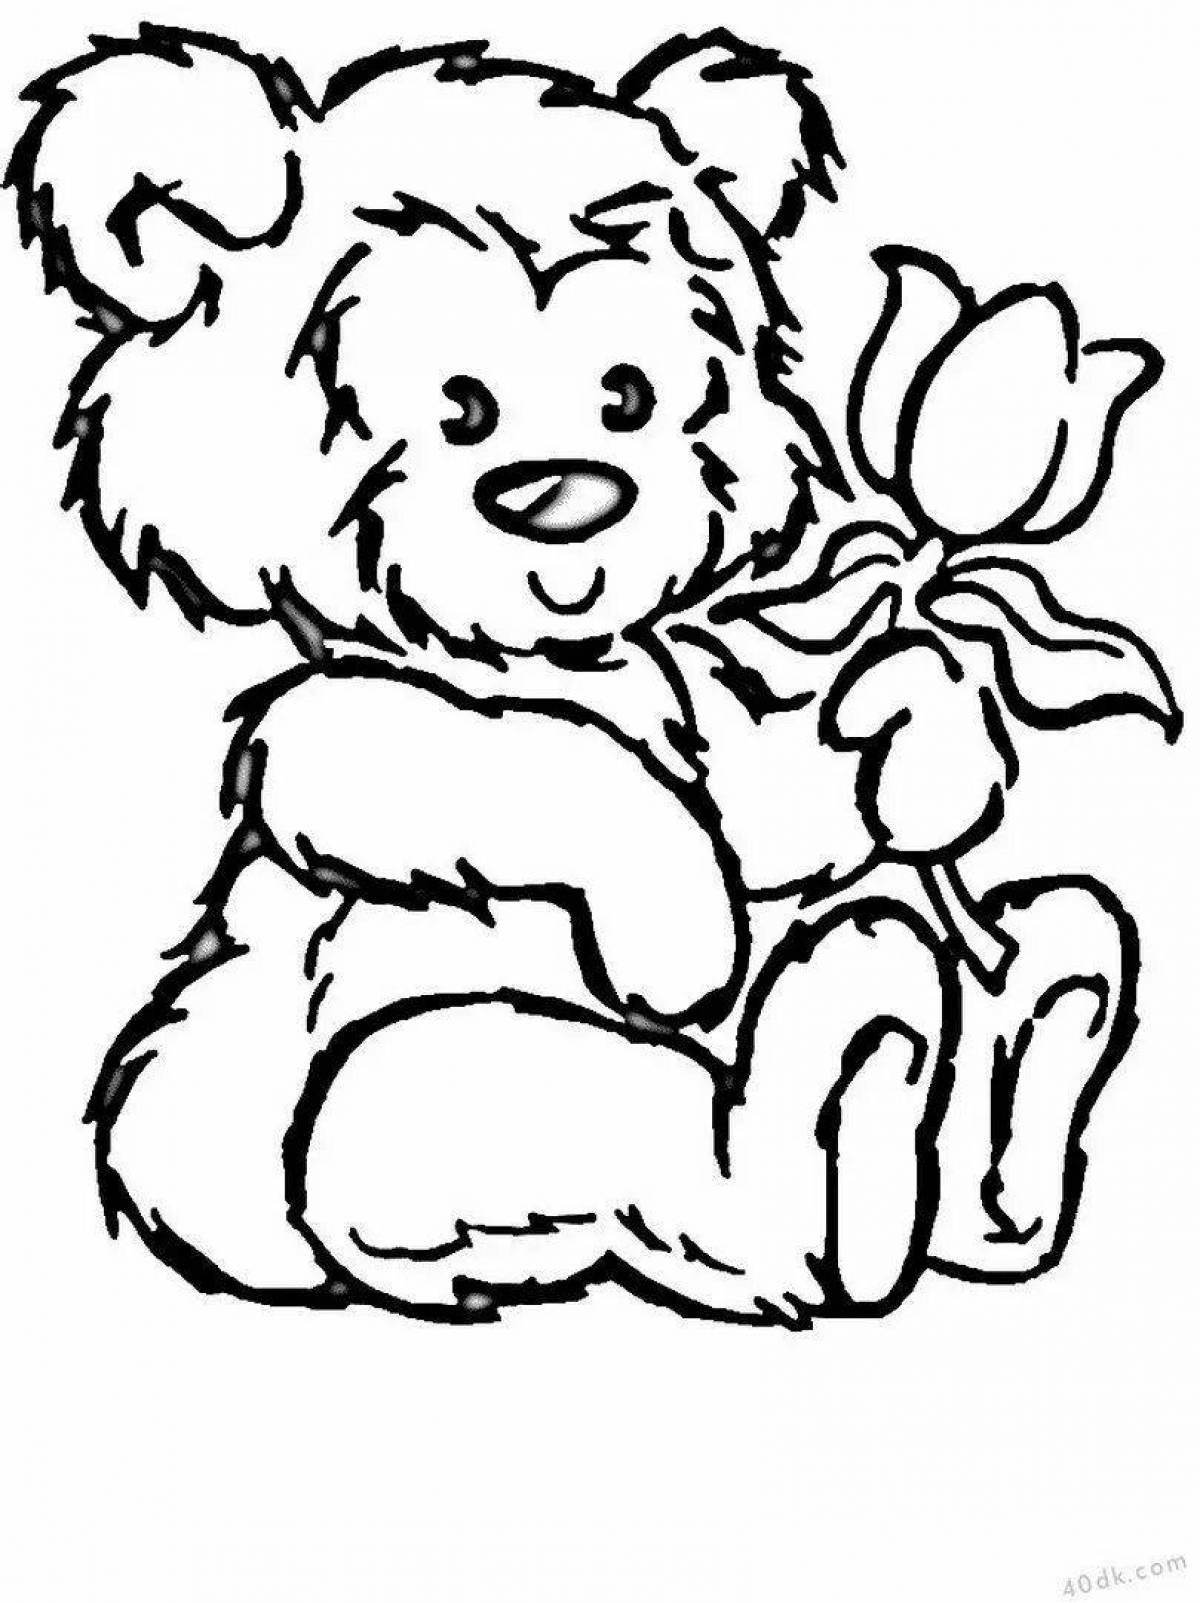 Exuberant bear with flowers